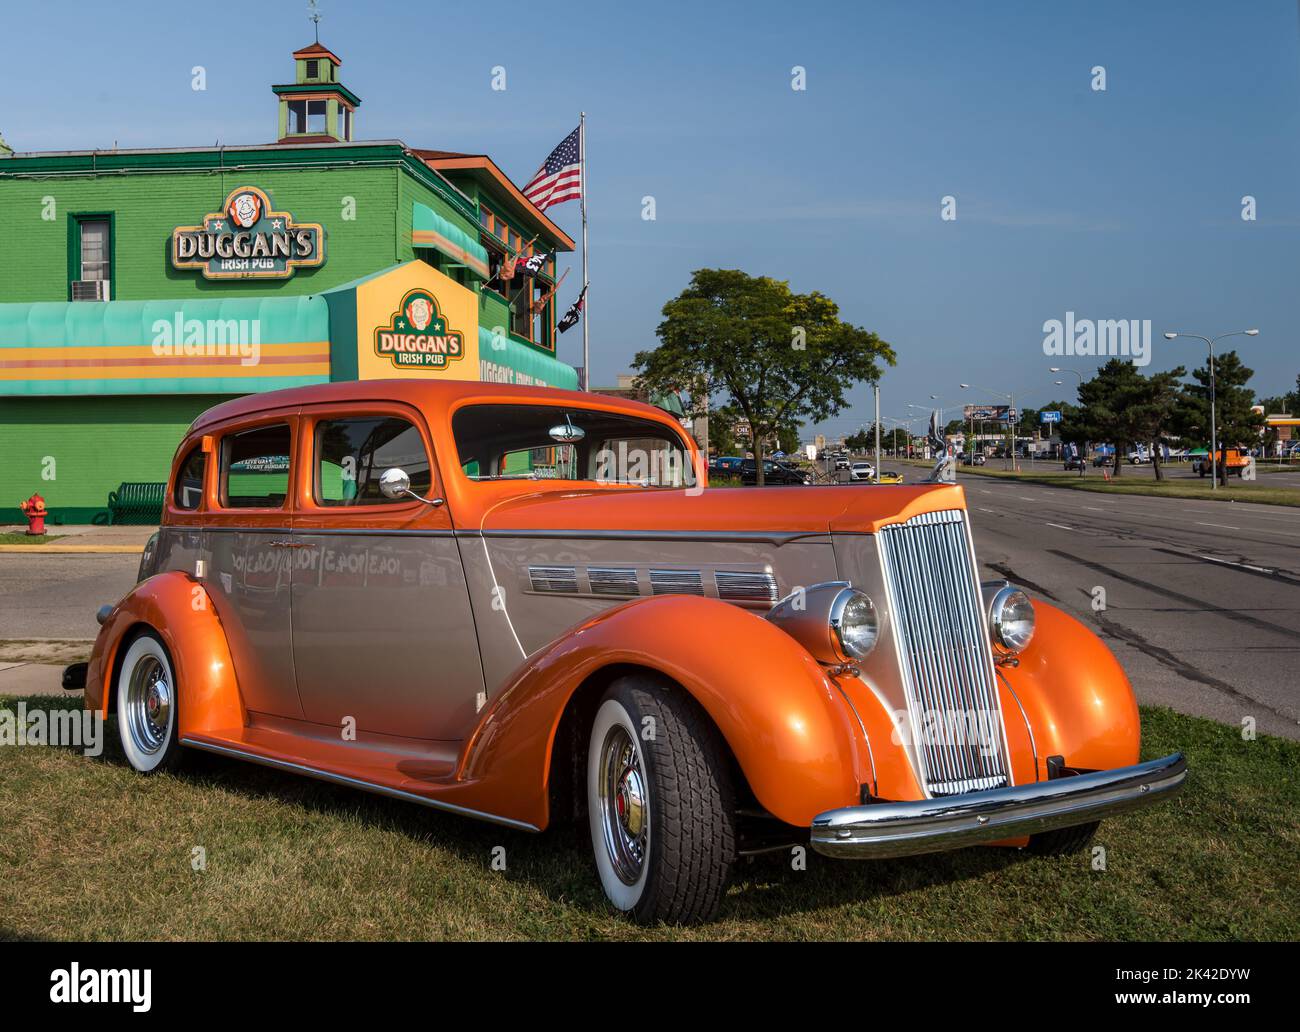 ROYAL OAK, MI/USA - AUGUST 16, 2019: A 1937 Packard 115 car near popular Duggan's Irish Pub, Woodward Dream Cruise route. Stock Photo